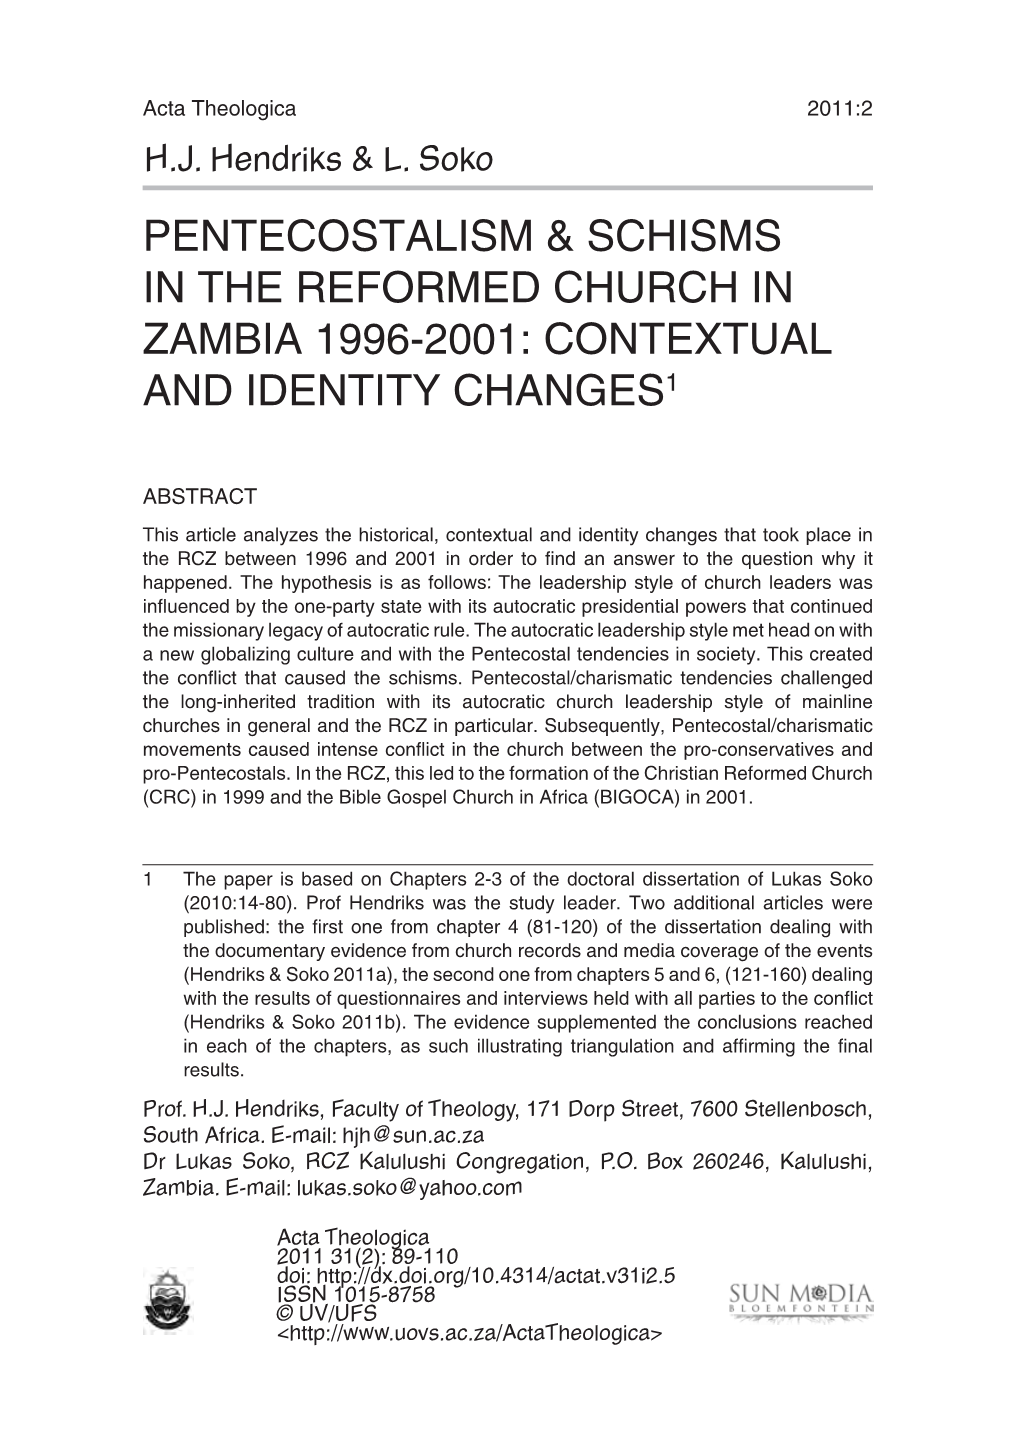 Pentecostalism & Schisms in The